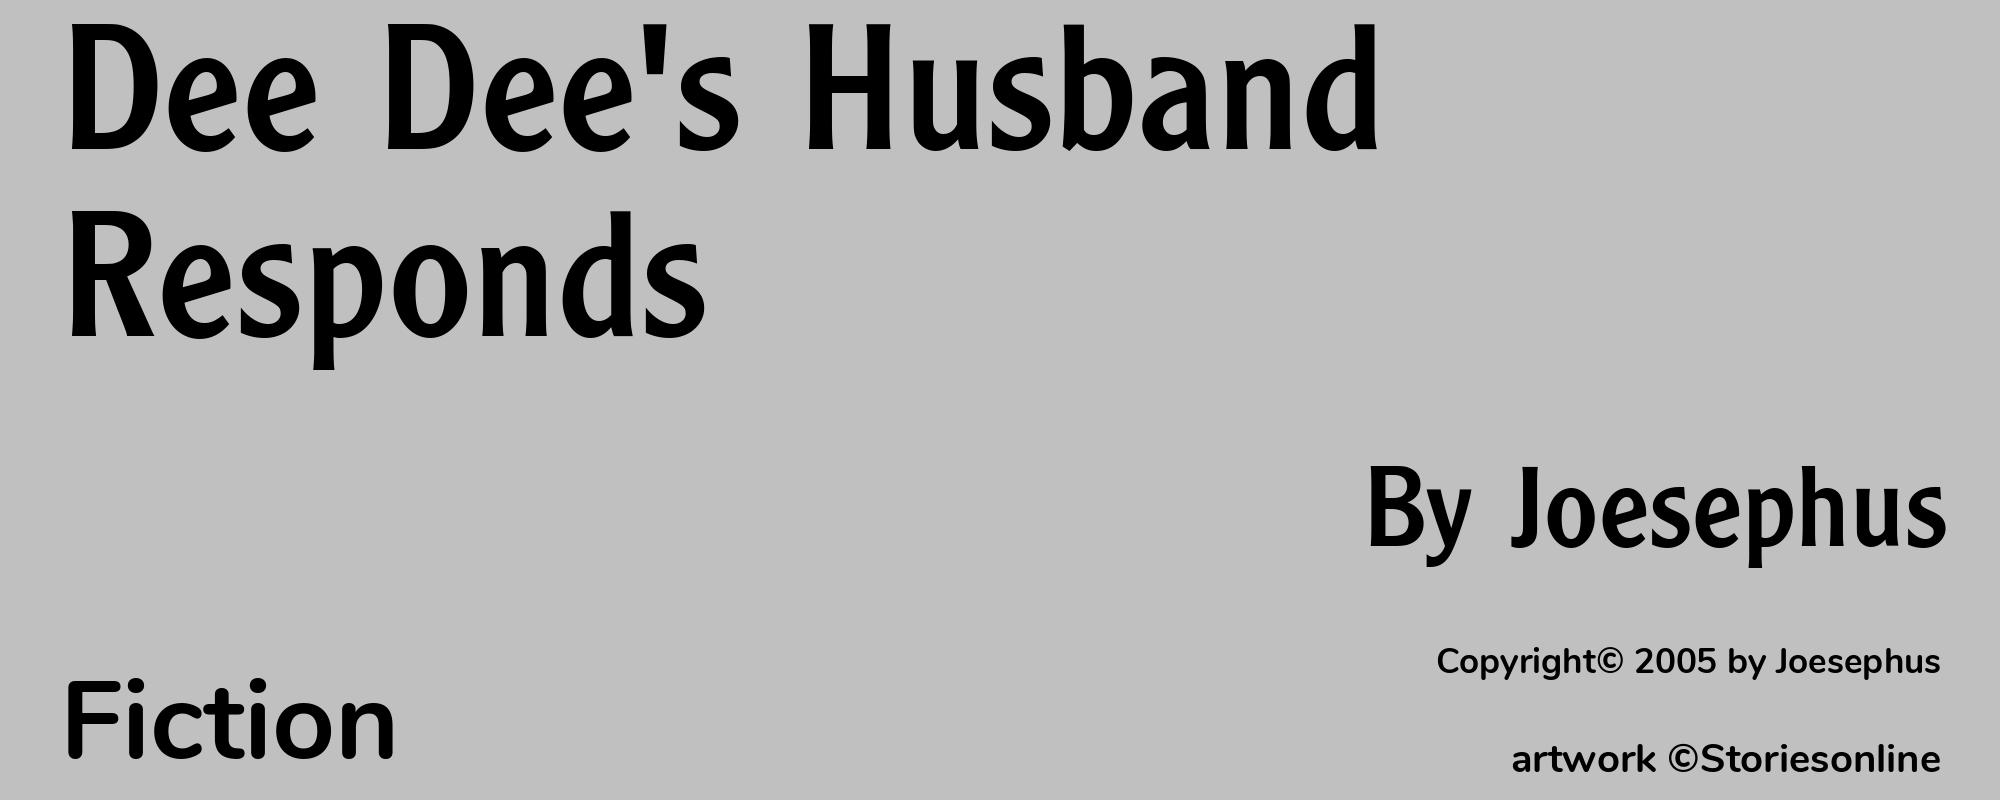 Dee Dee's Husband Responds - Cover